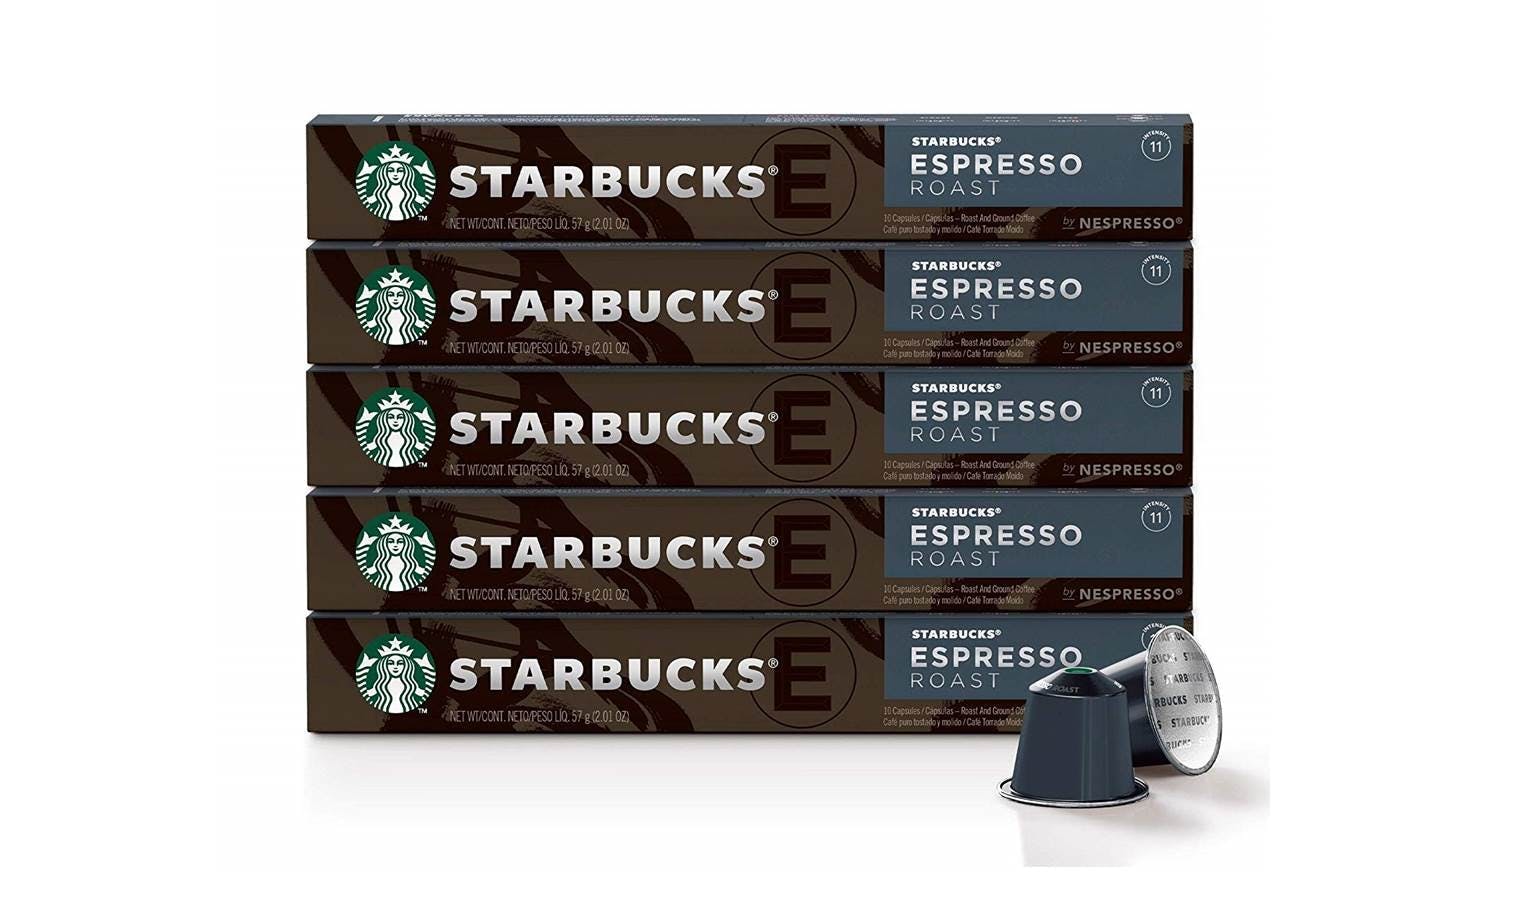 Starbucks Nespresso Coffee Capsules - Espresso Roast